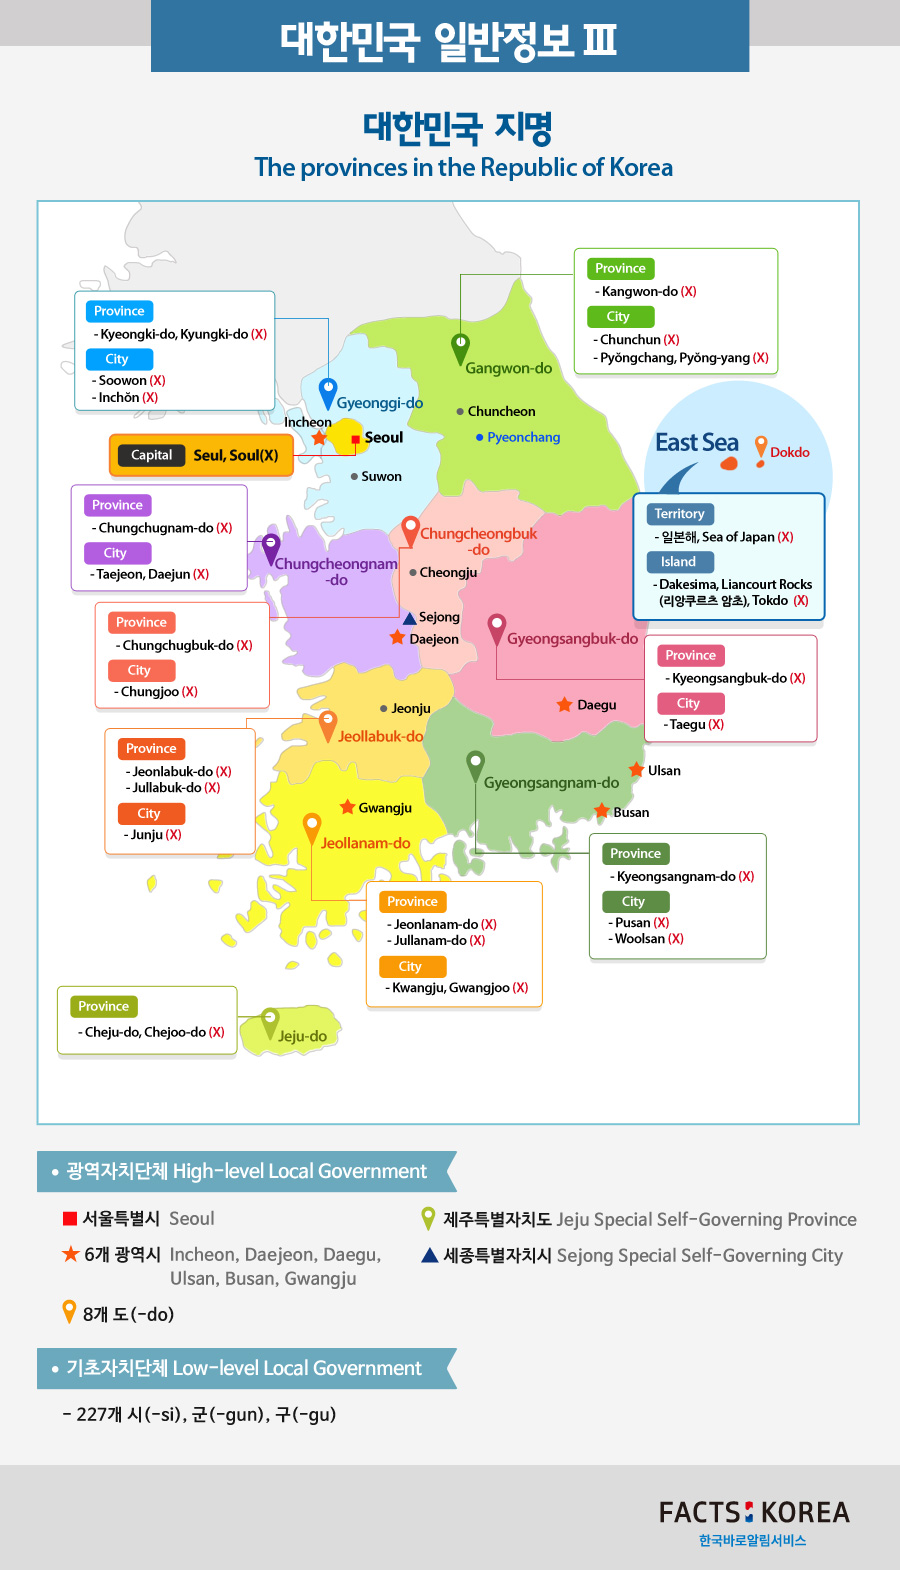 The provinces in the Republic of Korea